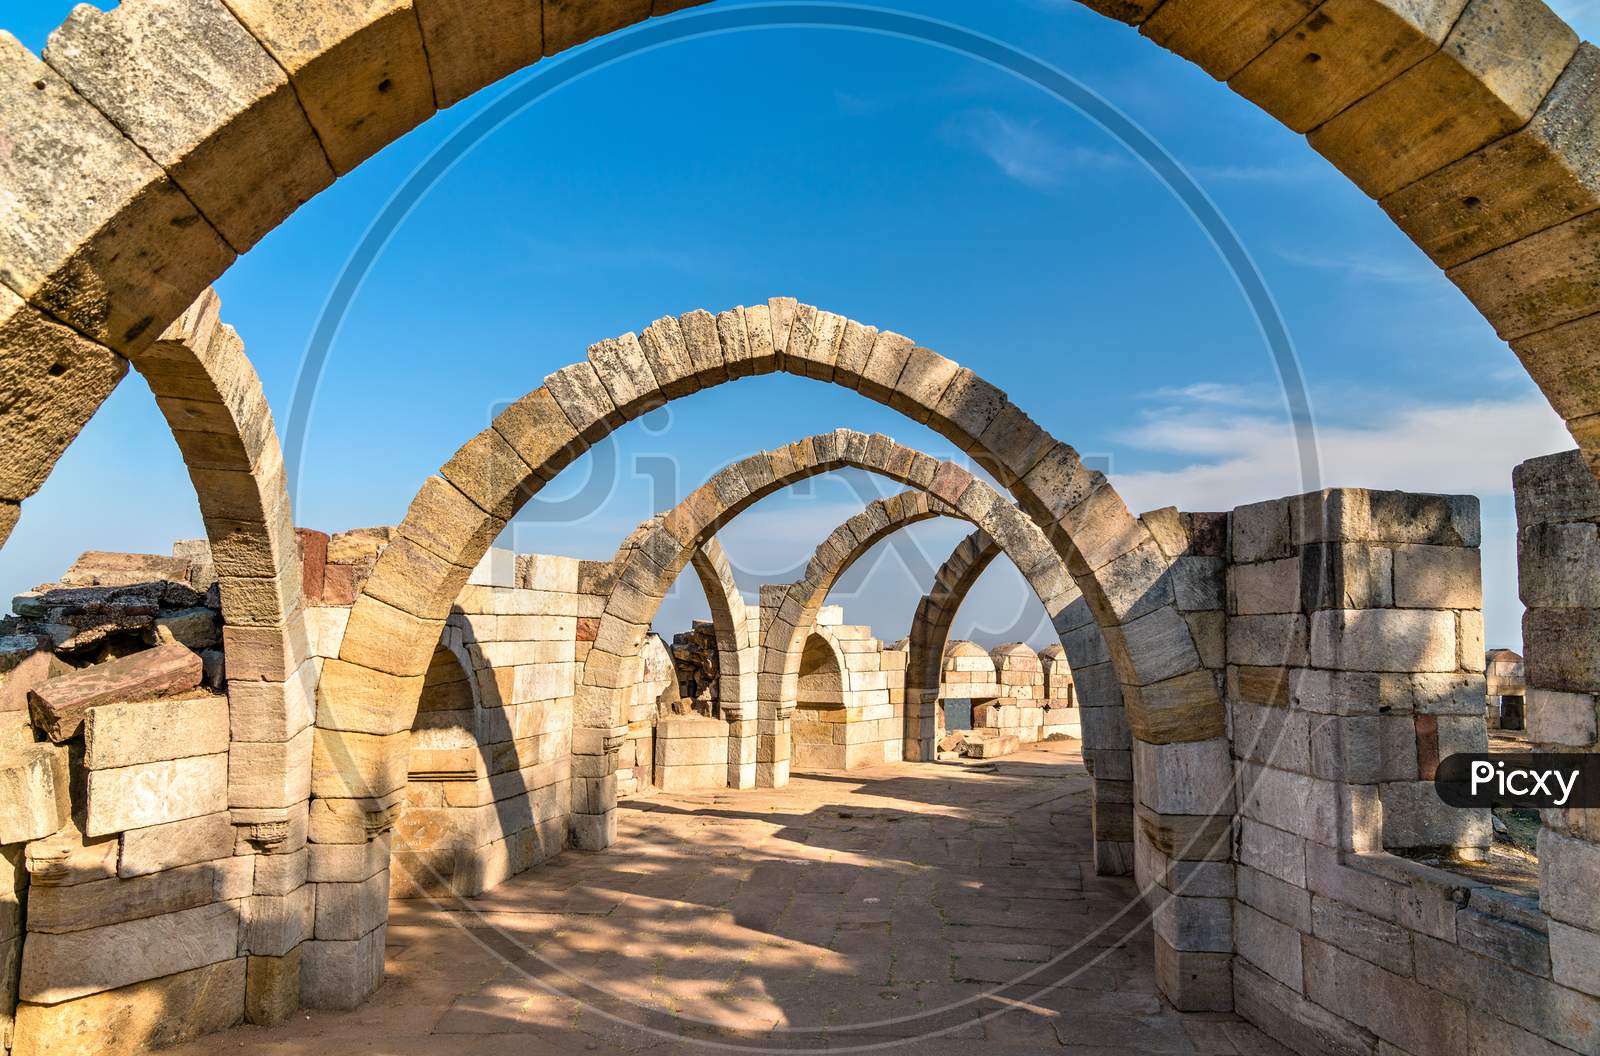 Saat Kaman, Seven Arches At Pavagadh - Gujarat State Of India